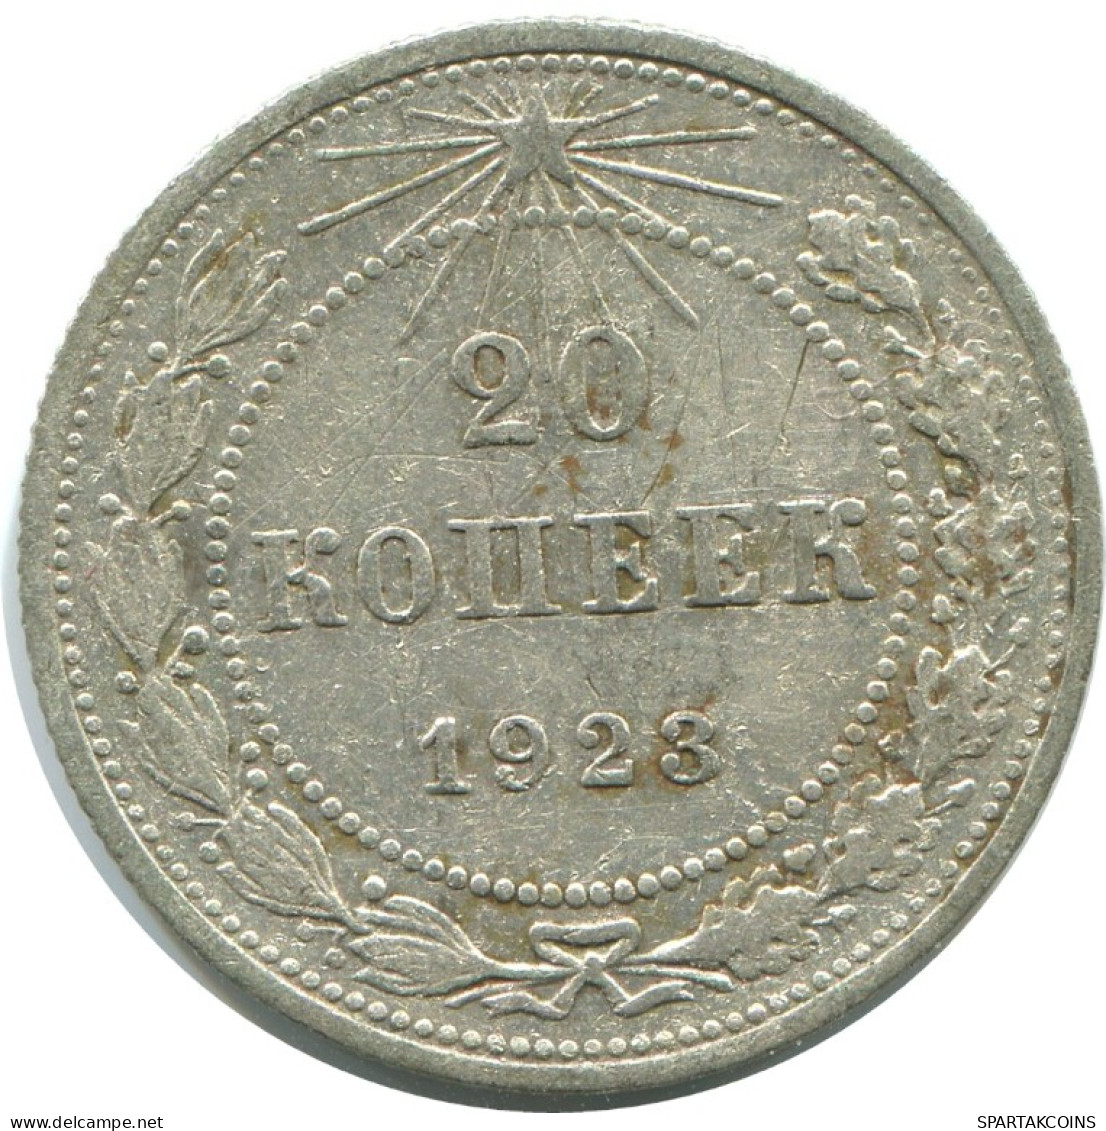 20 KOPEKS 1923 RUSSIA RSFSR SILVER Coin HIGH GRADE #AF500.4.U.A - Russie